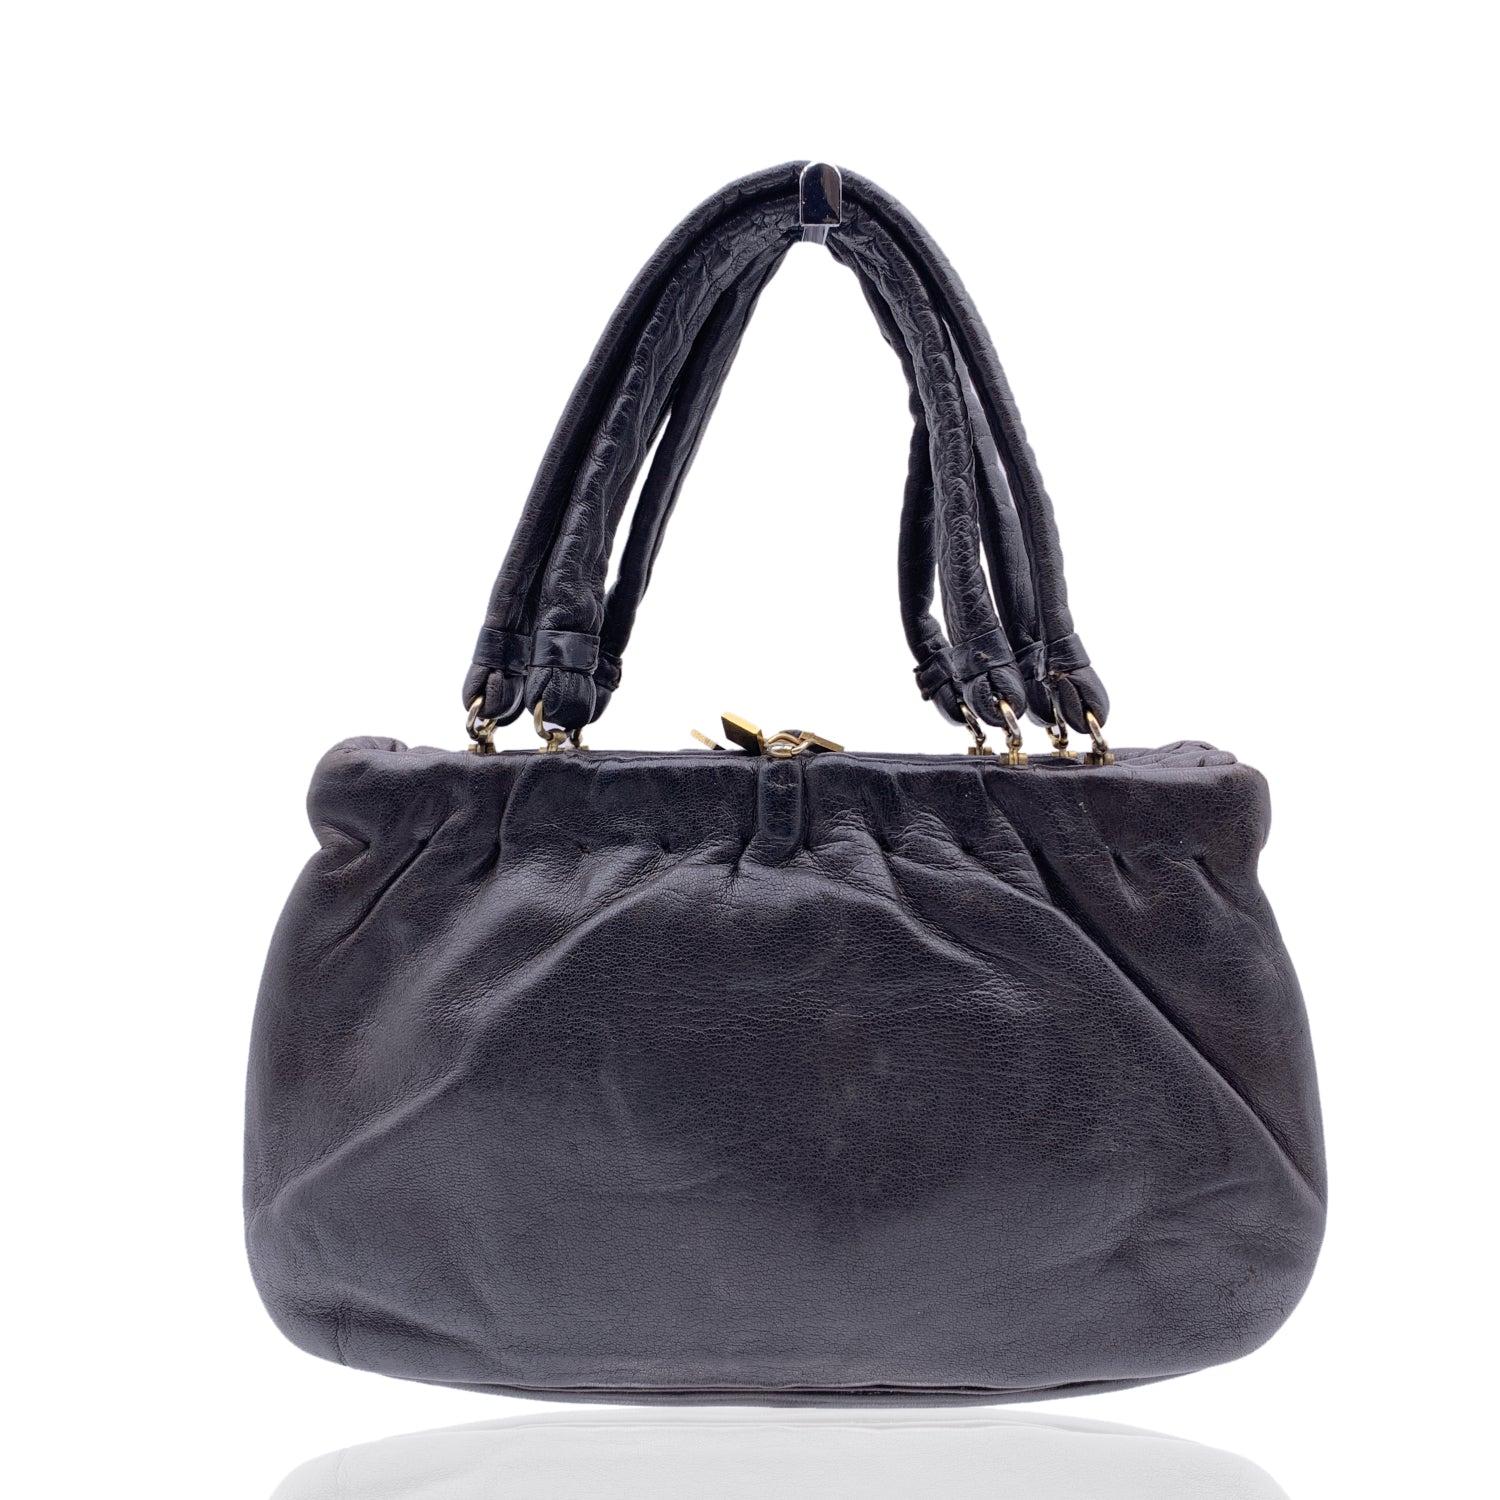 Fendi Rare Vintage Dark Brown Nappa Leather Handbag Satchel In Good Condition For Sale In Rome, Rome